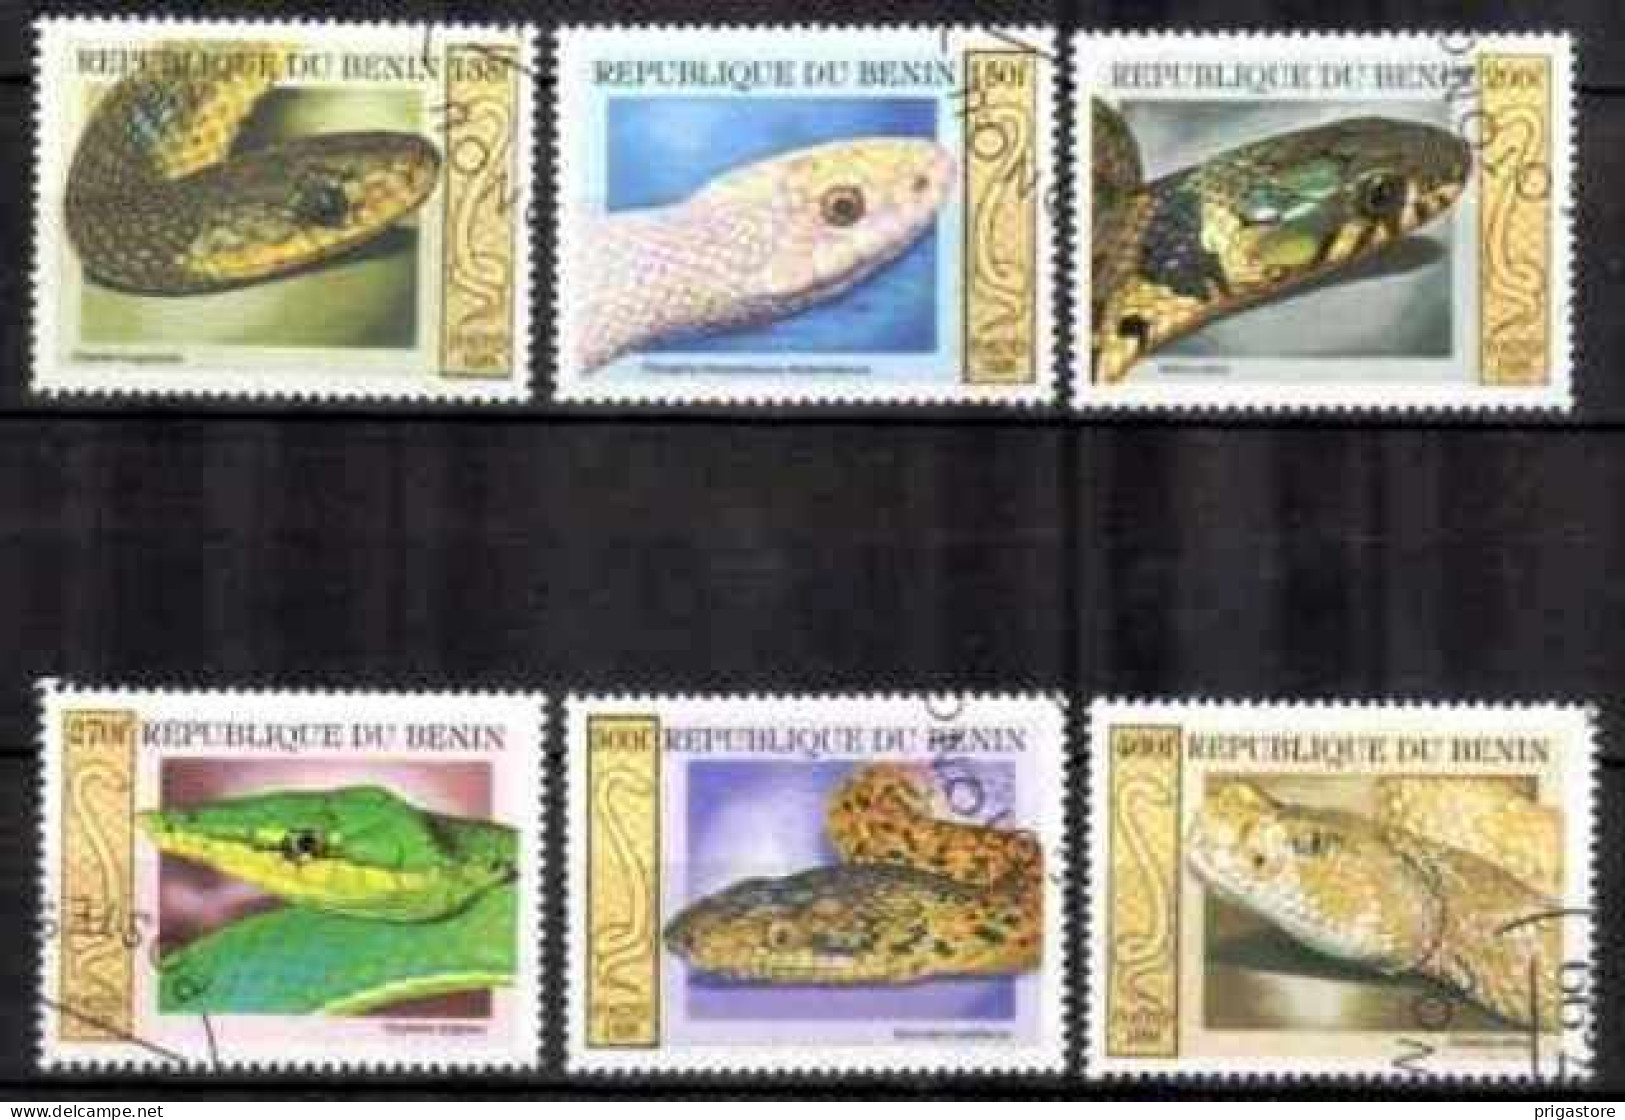 Bénin 1999 Animaux Serpents (30) Yvert N° 914 à 919 Oblitéré Used - Benin - Dahomey (1960-...)